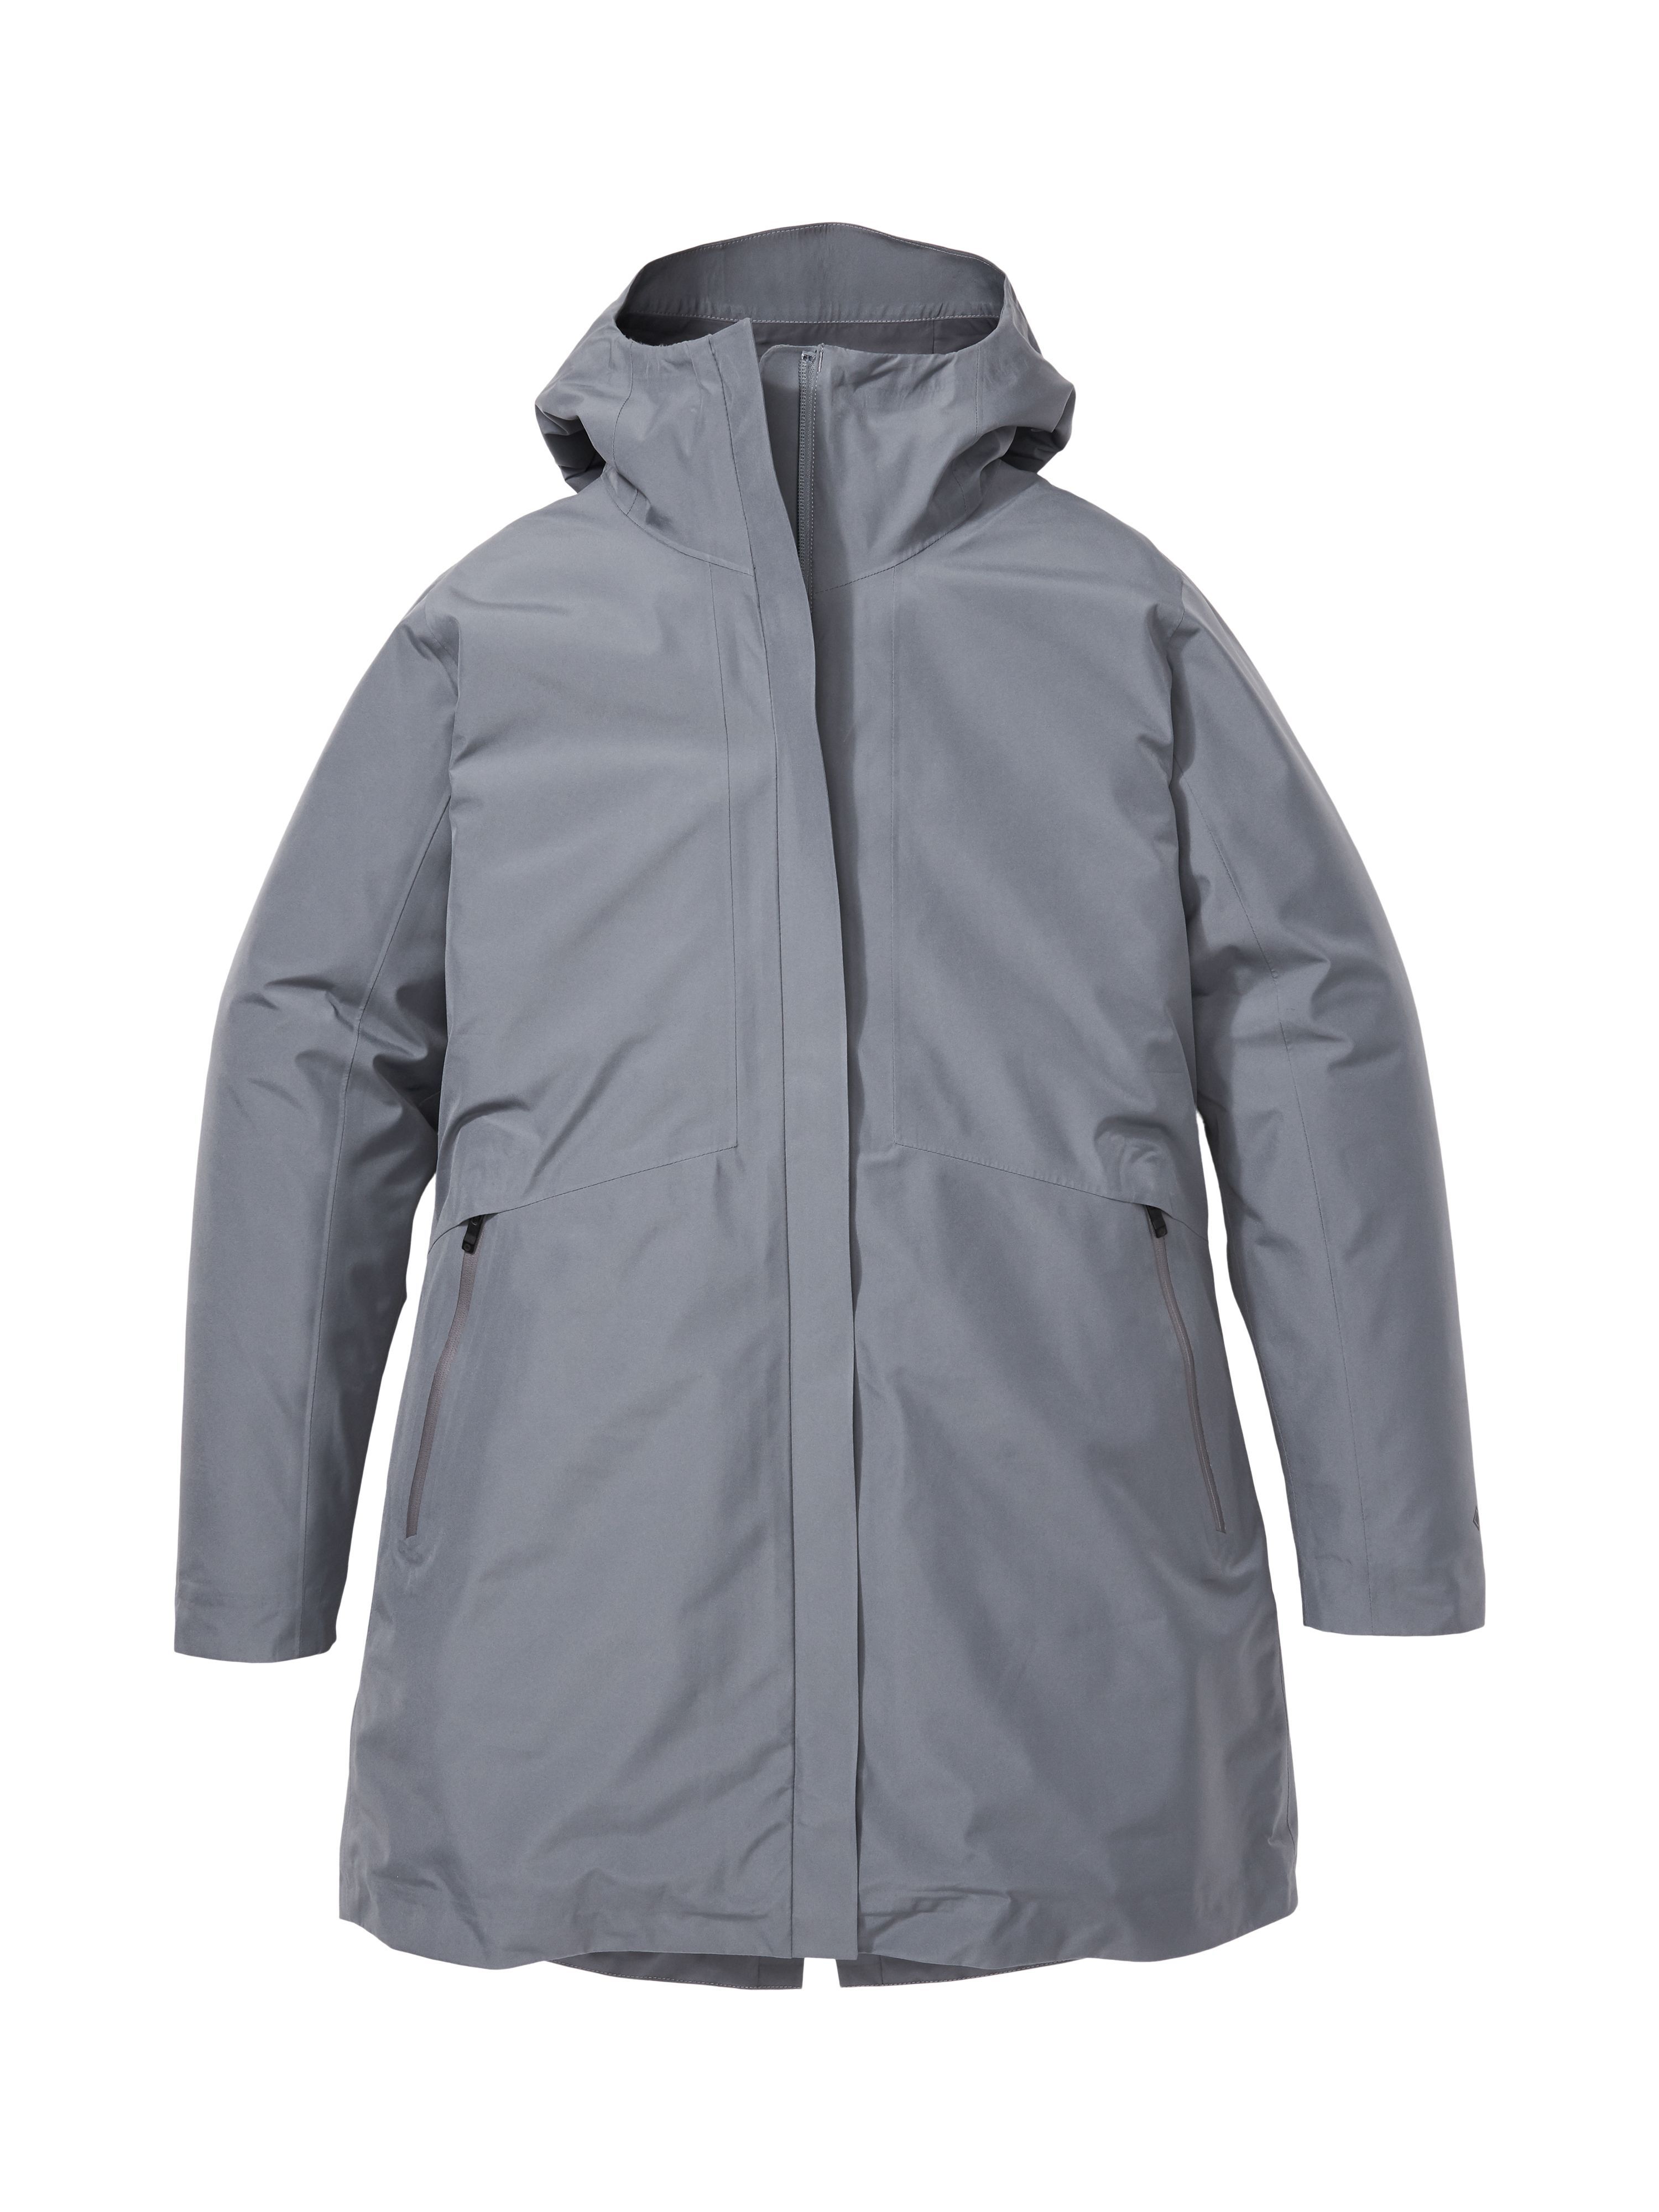 Marmot Bleeker Component Jacket - 3-in-1 jacket - Women's